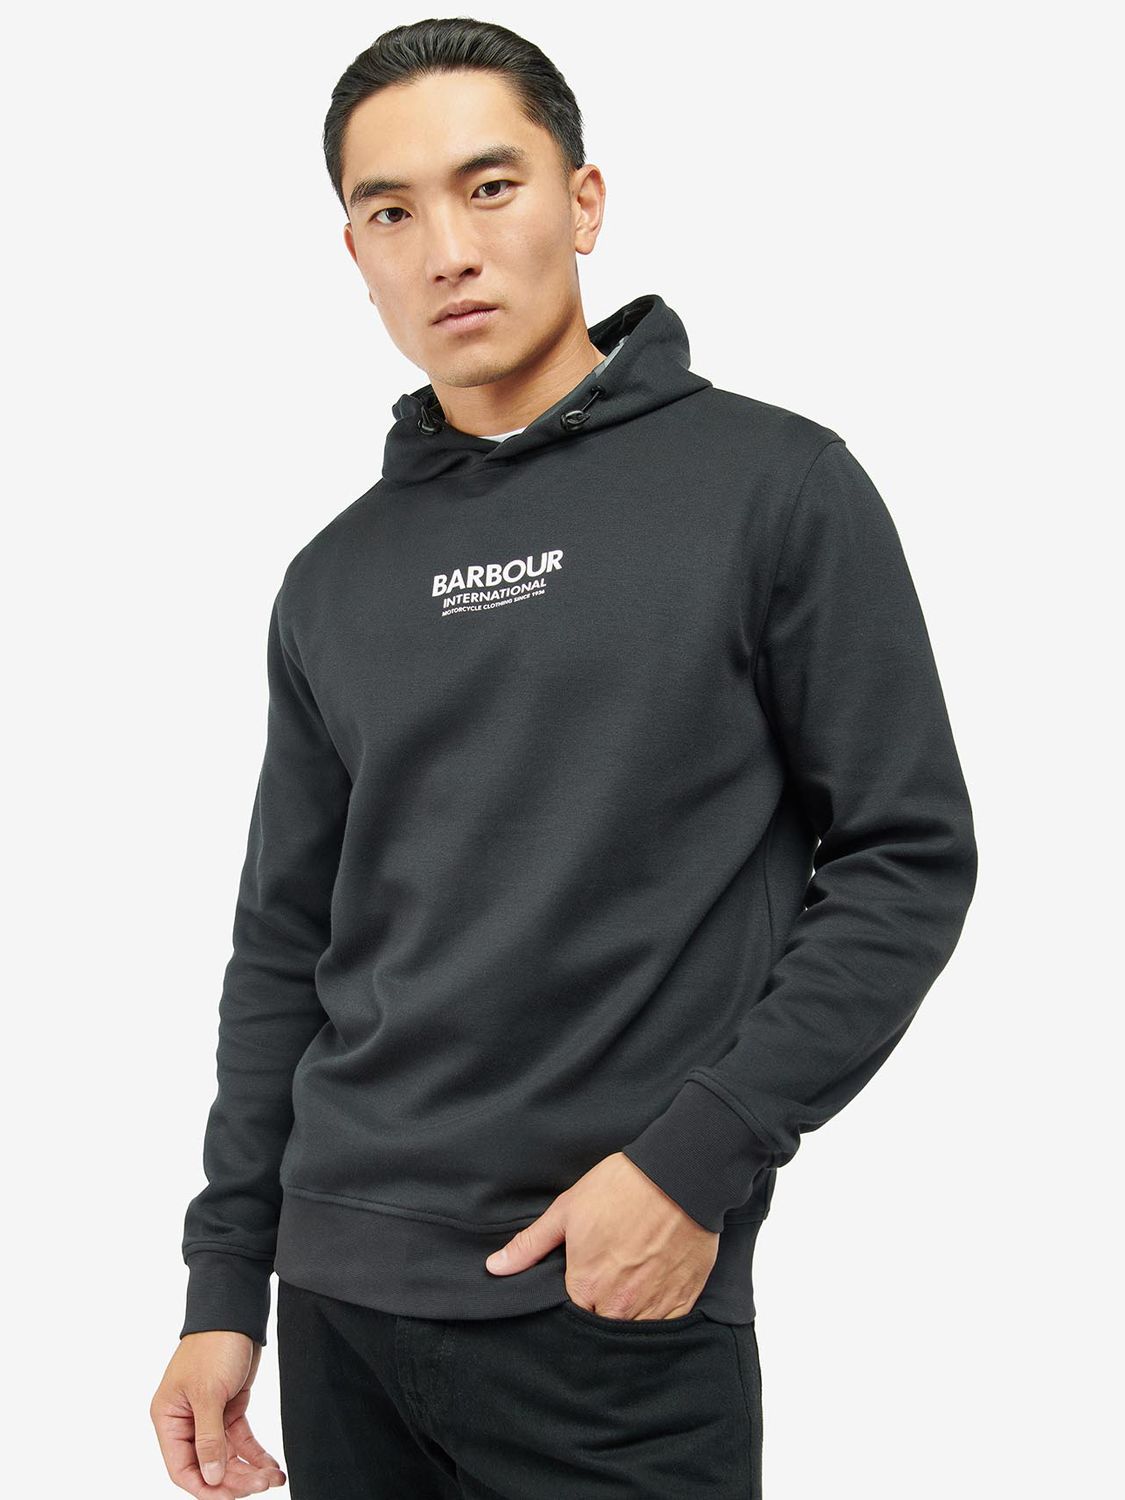 Barbour International Mission Hooded Sweatshirt, Black, S